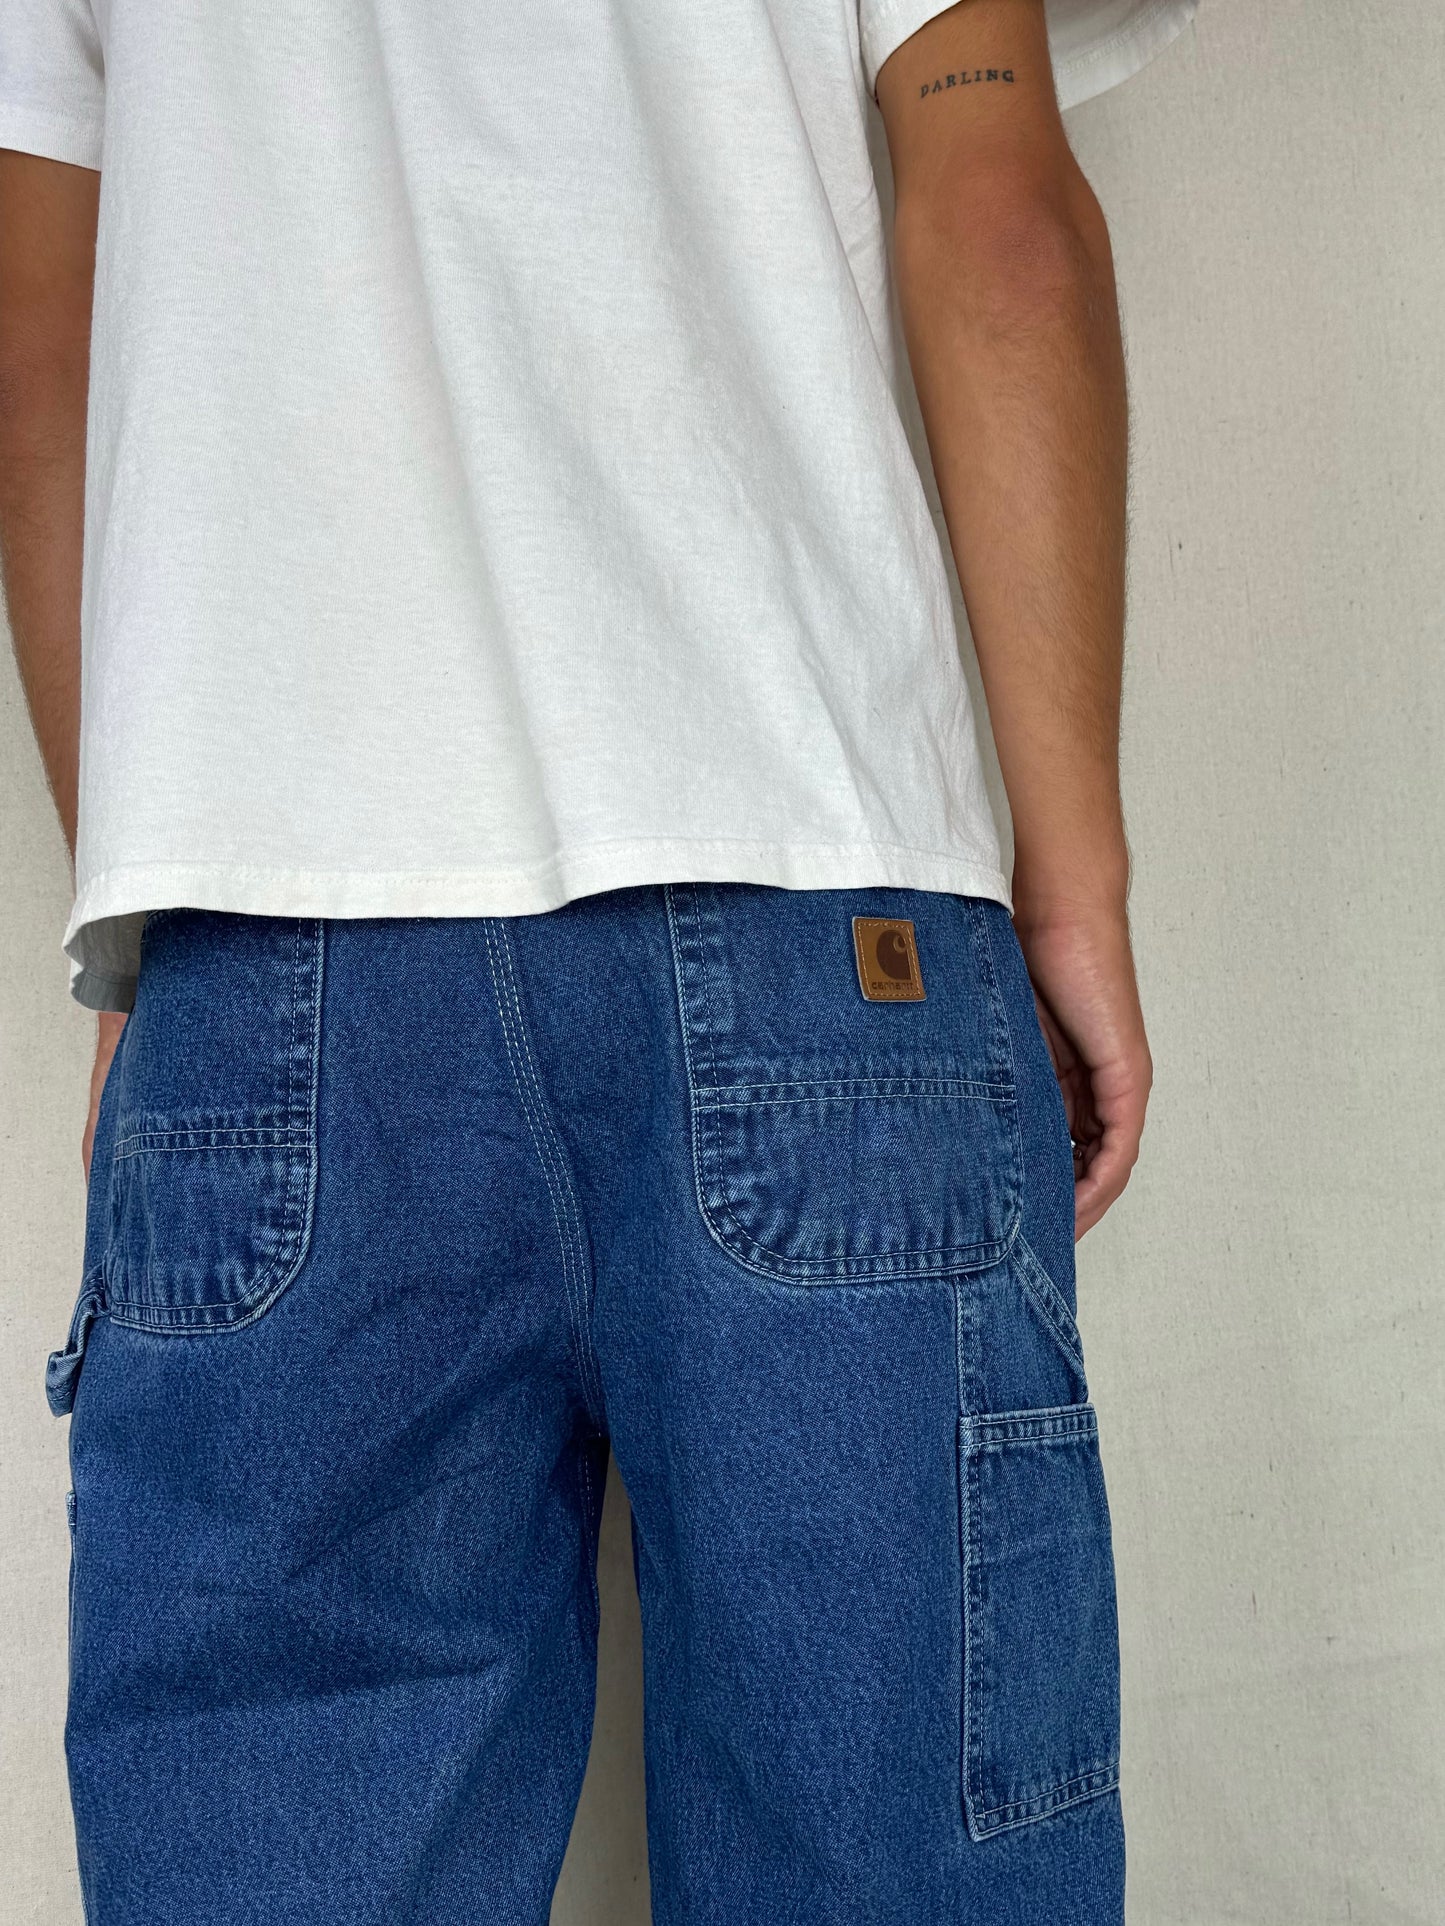 90's Carhartt Heavy Duty Vintage Carpenter Jeans Size 32x33